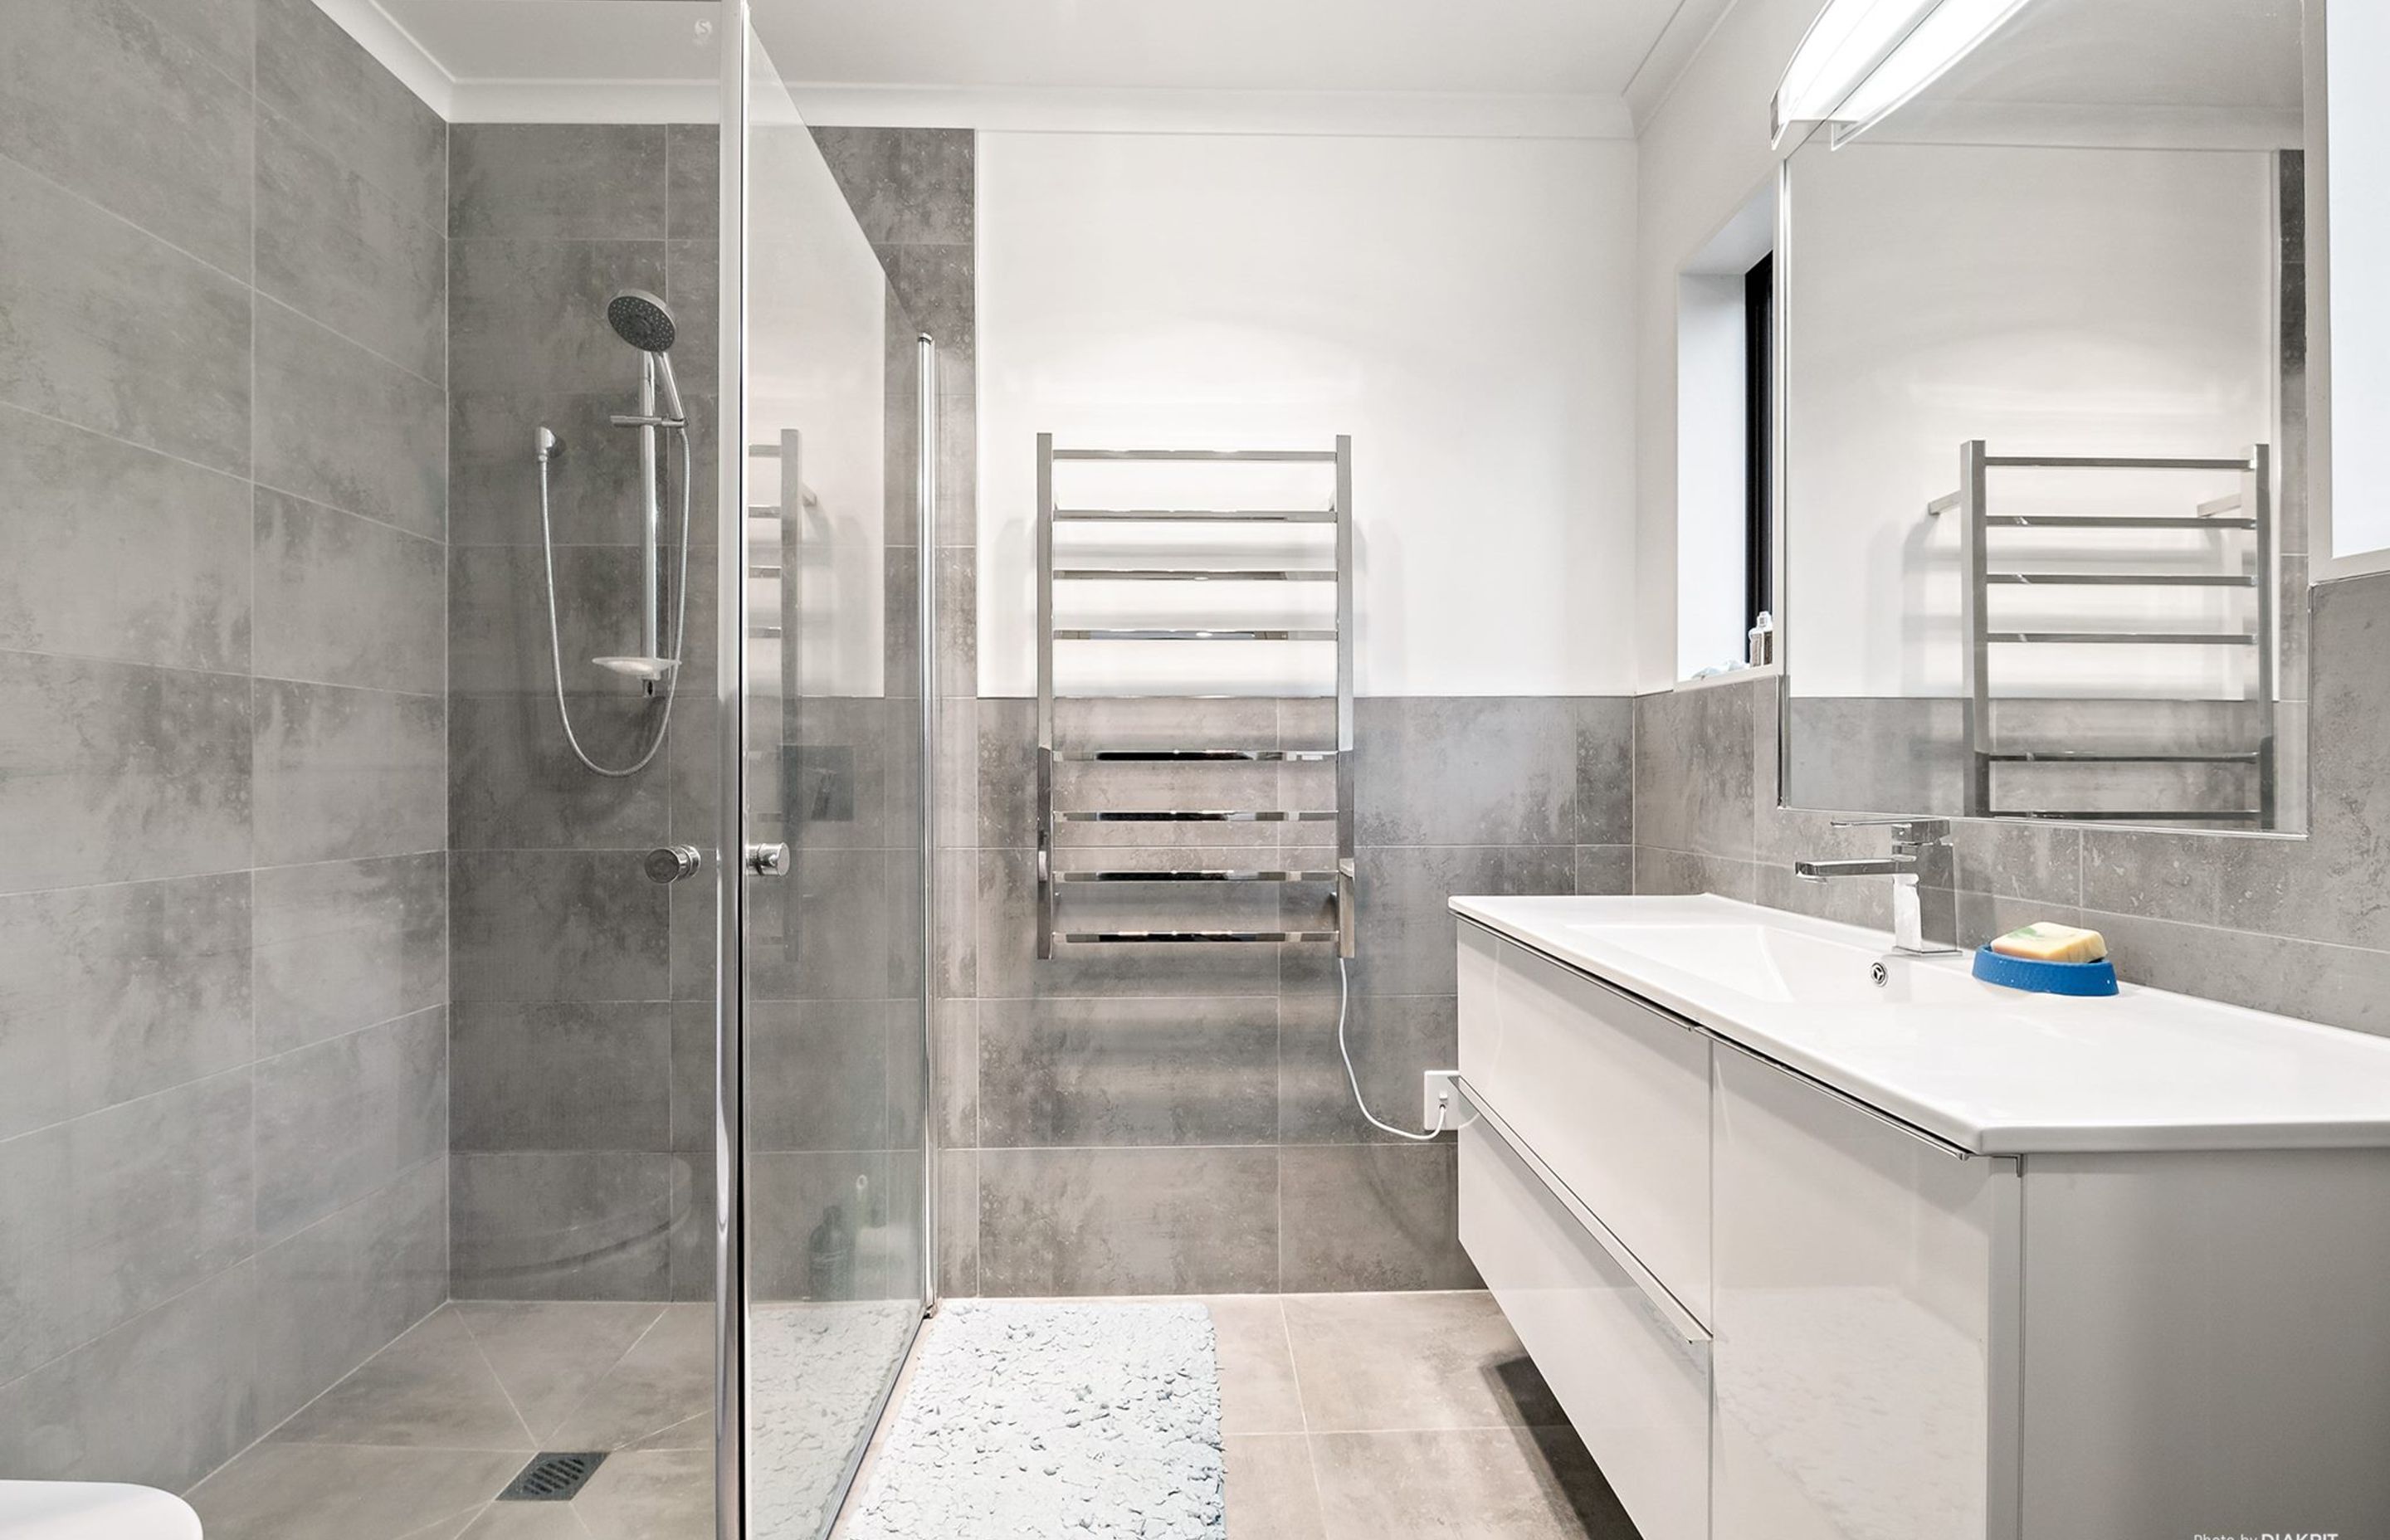 Bathroom - Large bathroom with long tiled shower